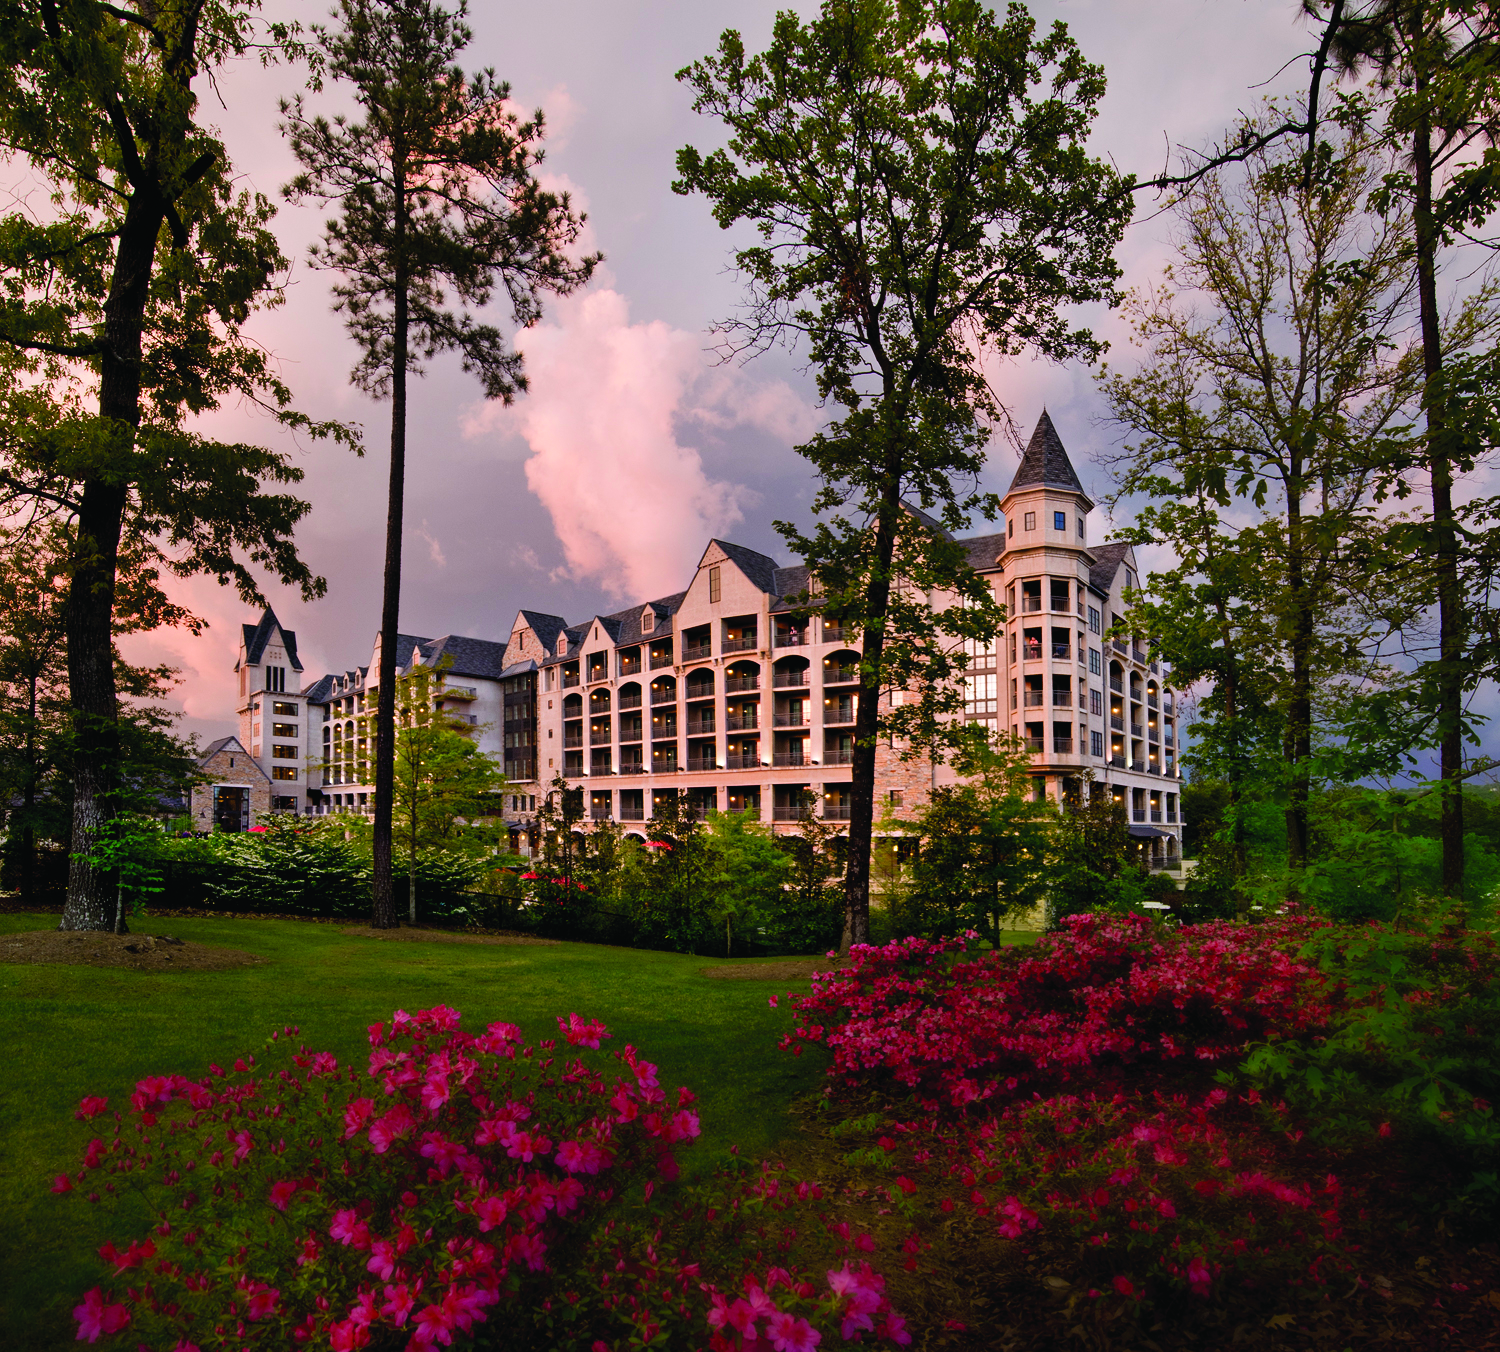 Ross Bridge Golf Resort & Spa is a top wedding venue in Birmingham, Alabama.